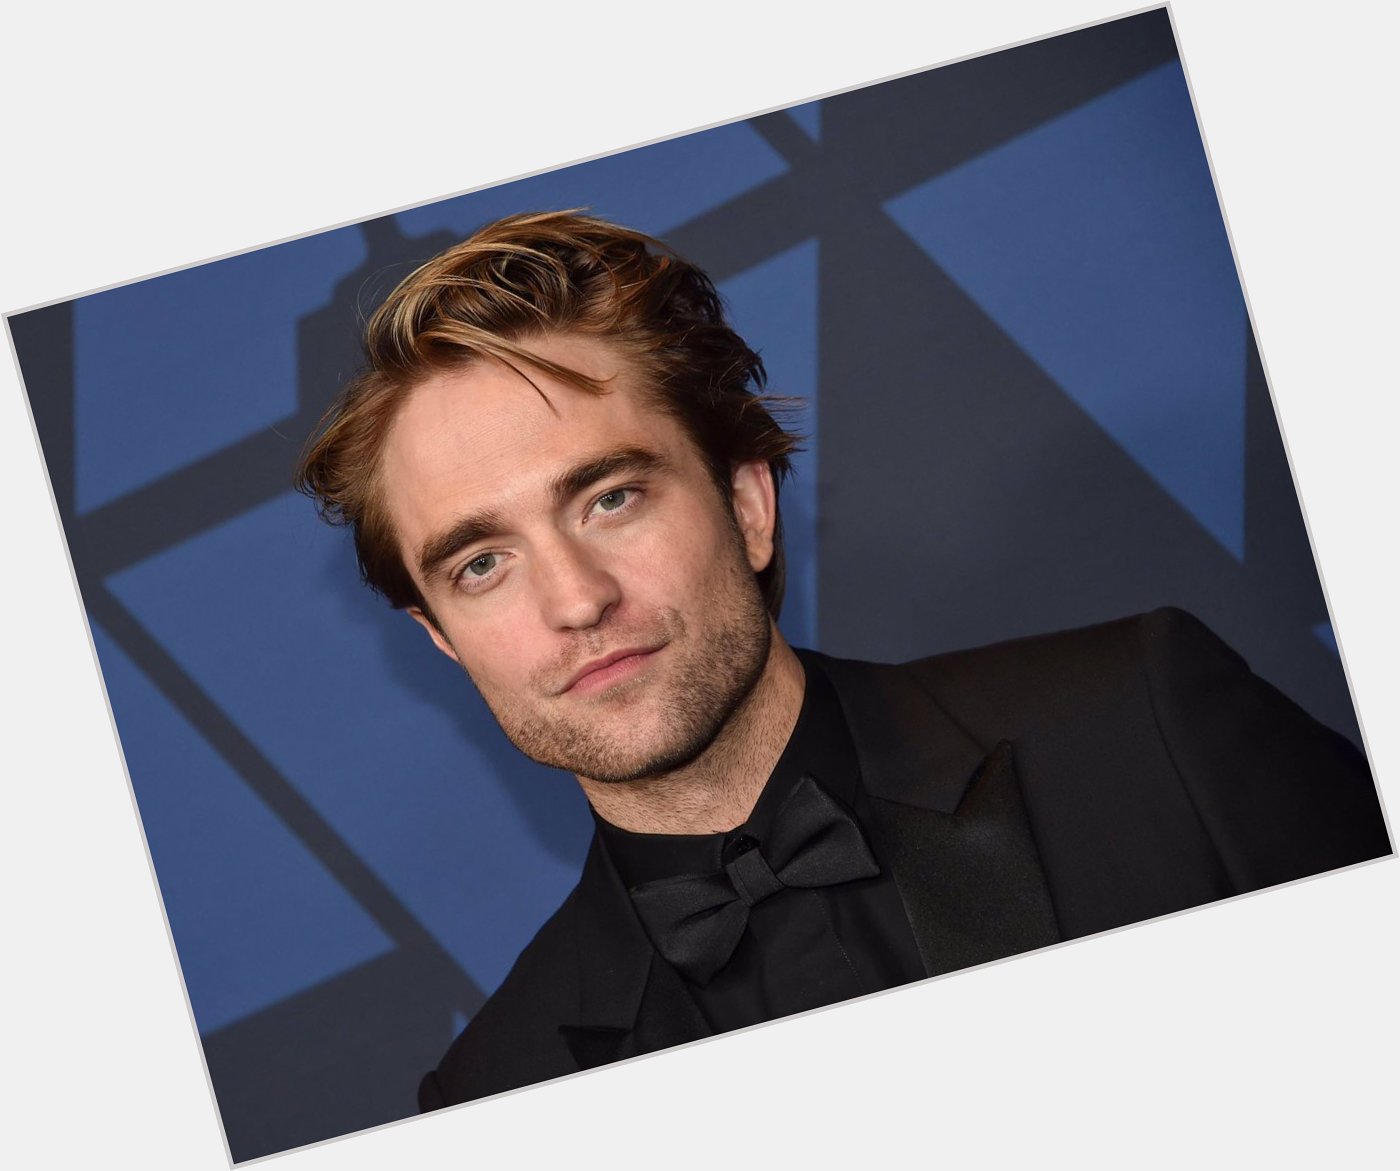 Happy Birthday Robert Pattinson!
You beautiful man 